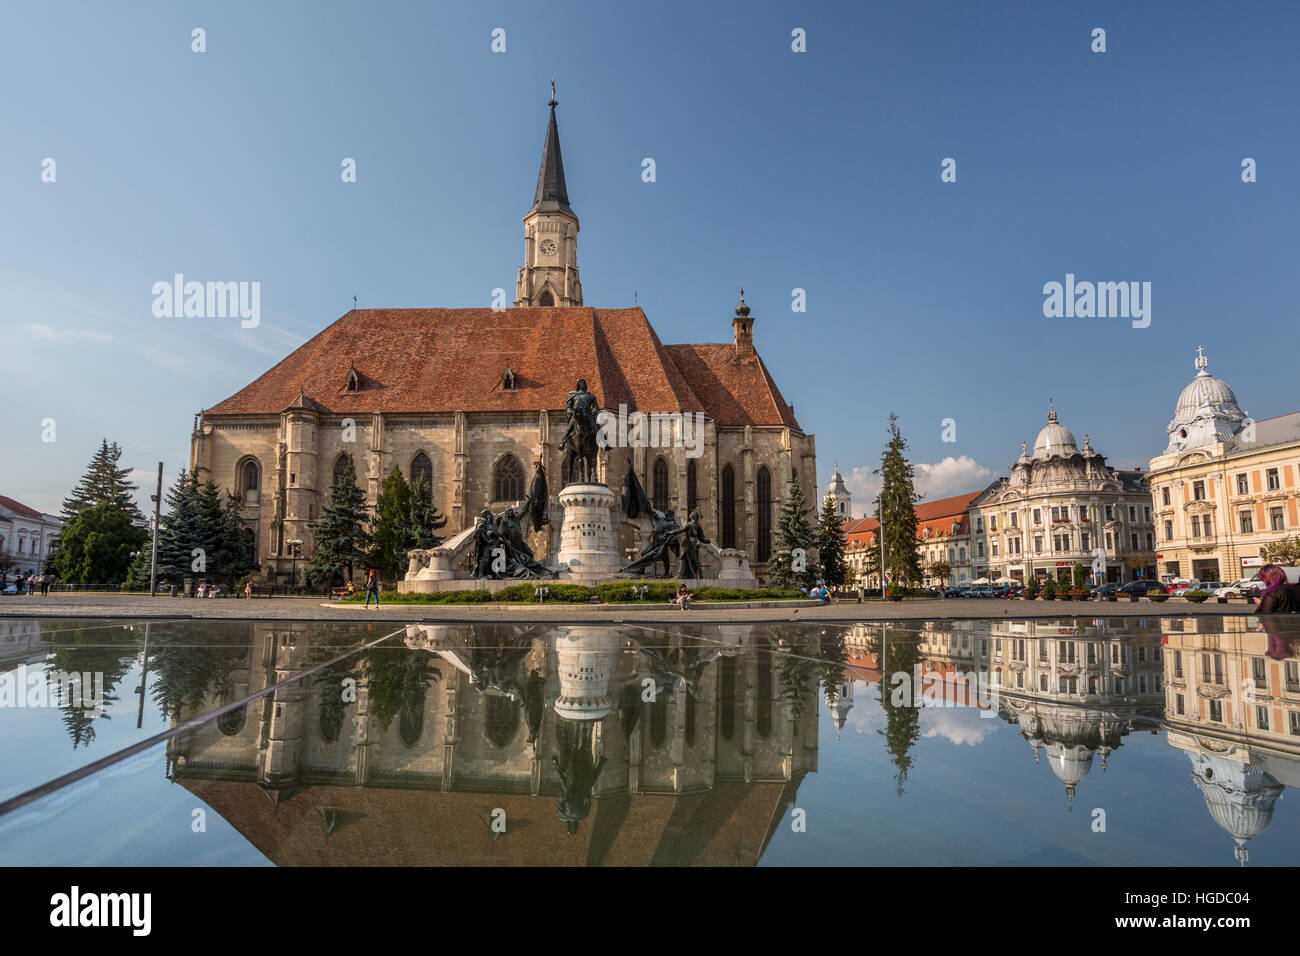 Romania, Transylvania, Cluj Napoca City, Mathia Rex Monument, St. Michael's Church, Unirii Square Stock Photo